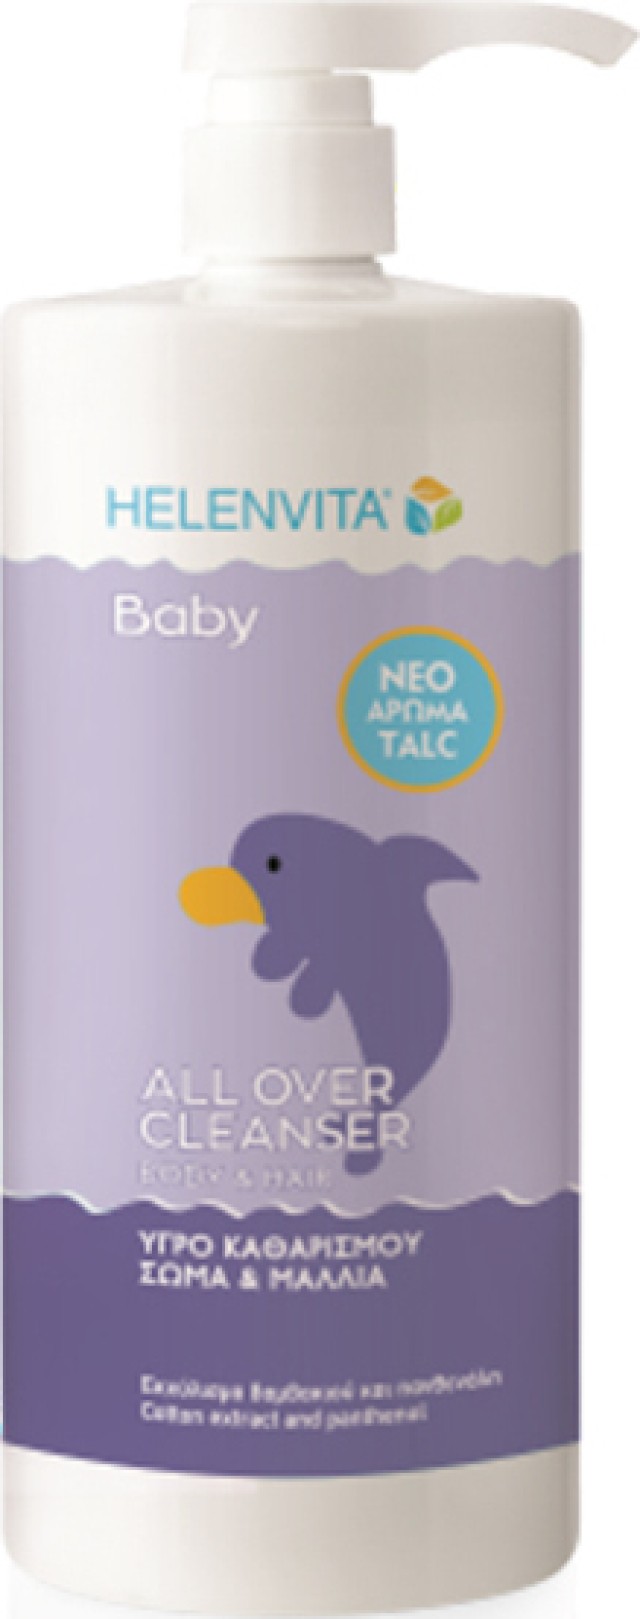 Helenvita Baby All Over Cleanser Perfume Talc Απαλό Σαμπουάν - Αφρόλουτρο Για Σώμα - Μαλλιά, 1000ml (-40%)